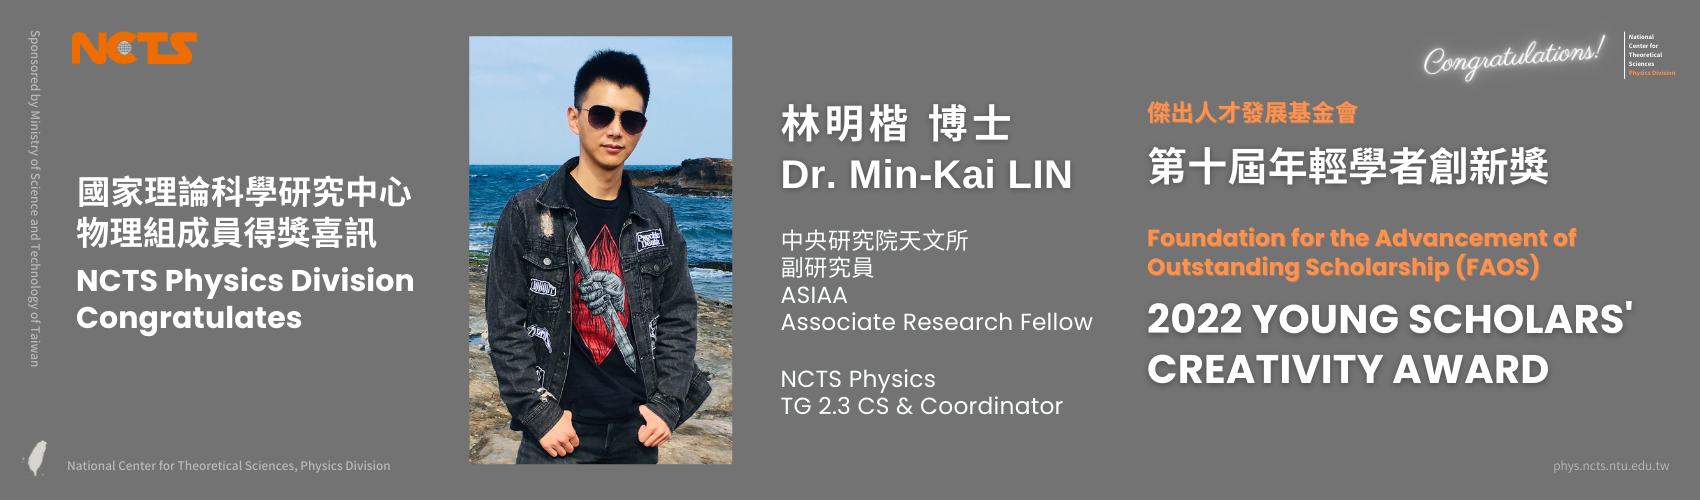 NCTS Congratulates Dr. Min-Kai Lin on Winning 2022 FAOS Award